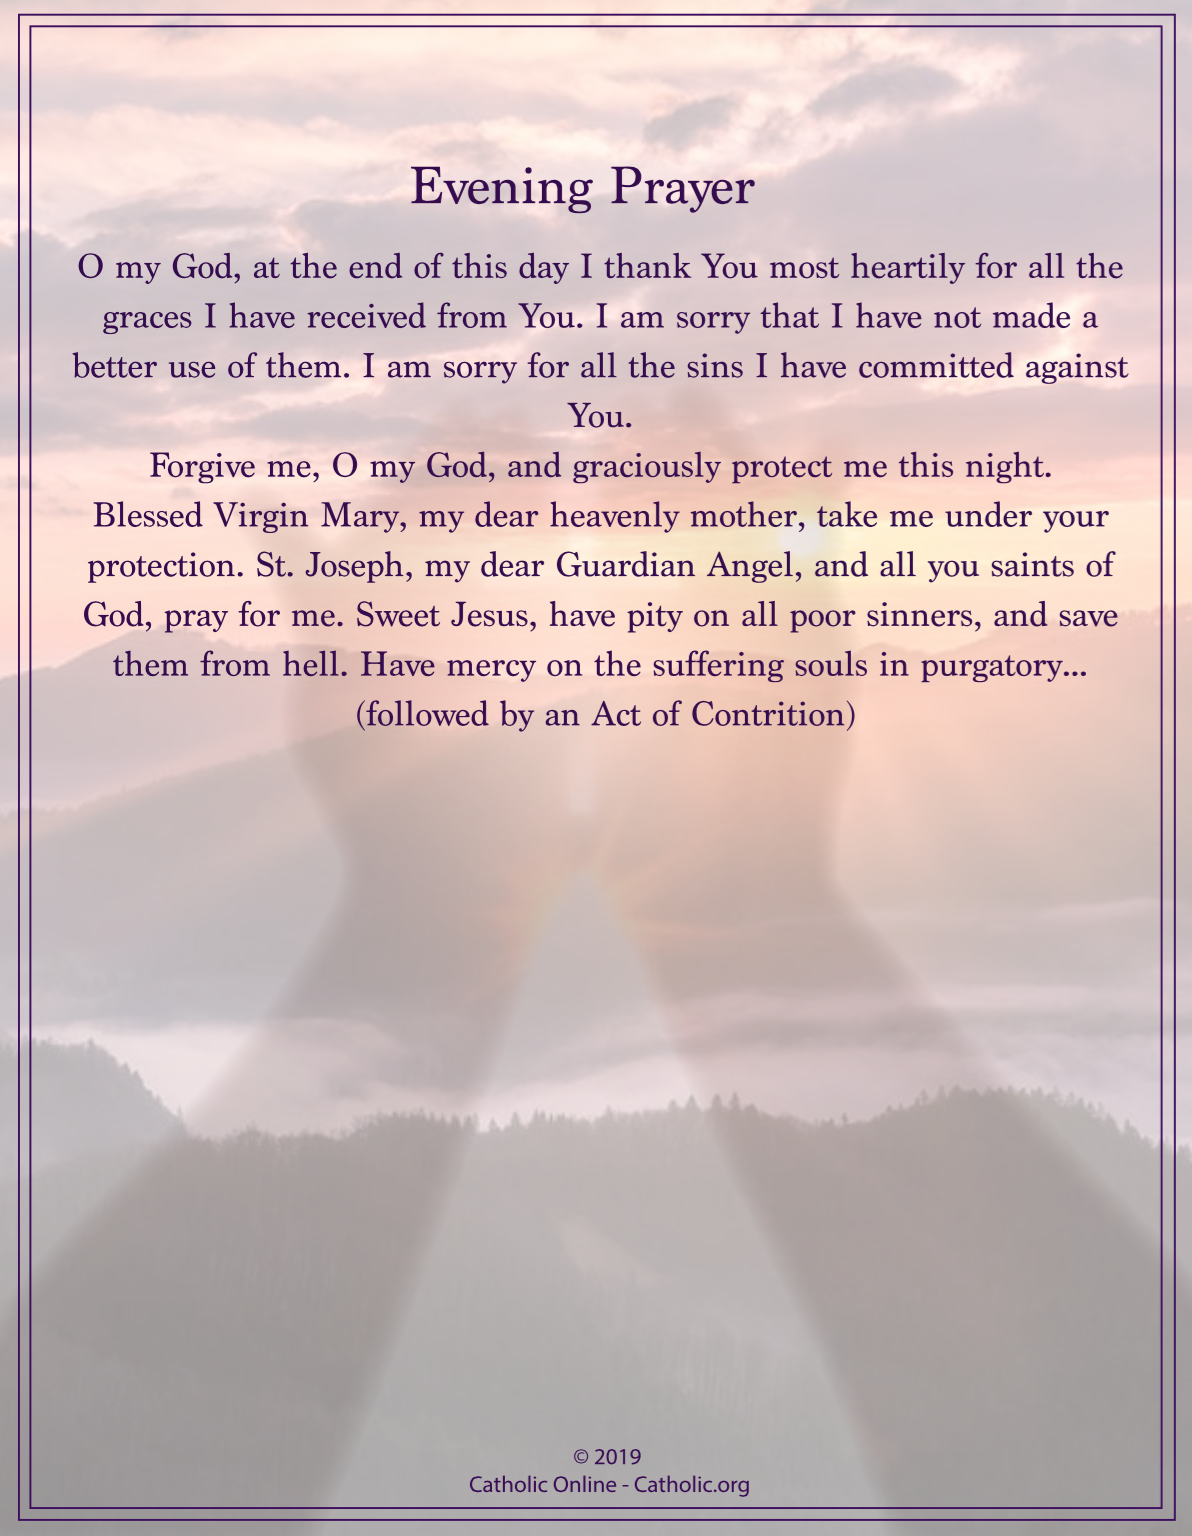 Evening Prayer (FREE PDF) | Catholic Online Learning Resources